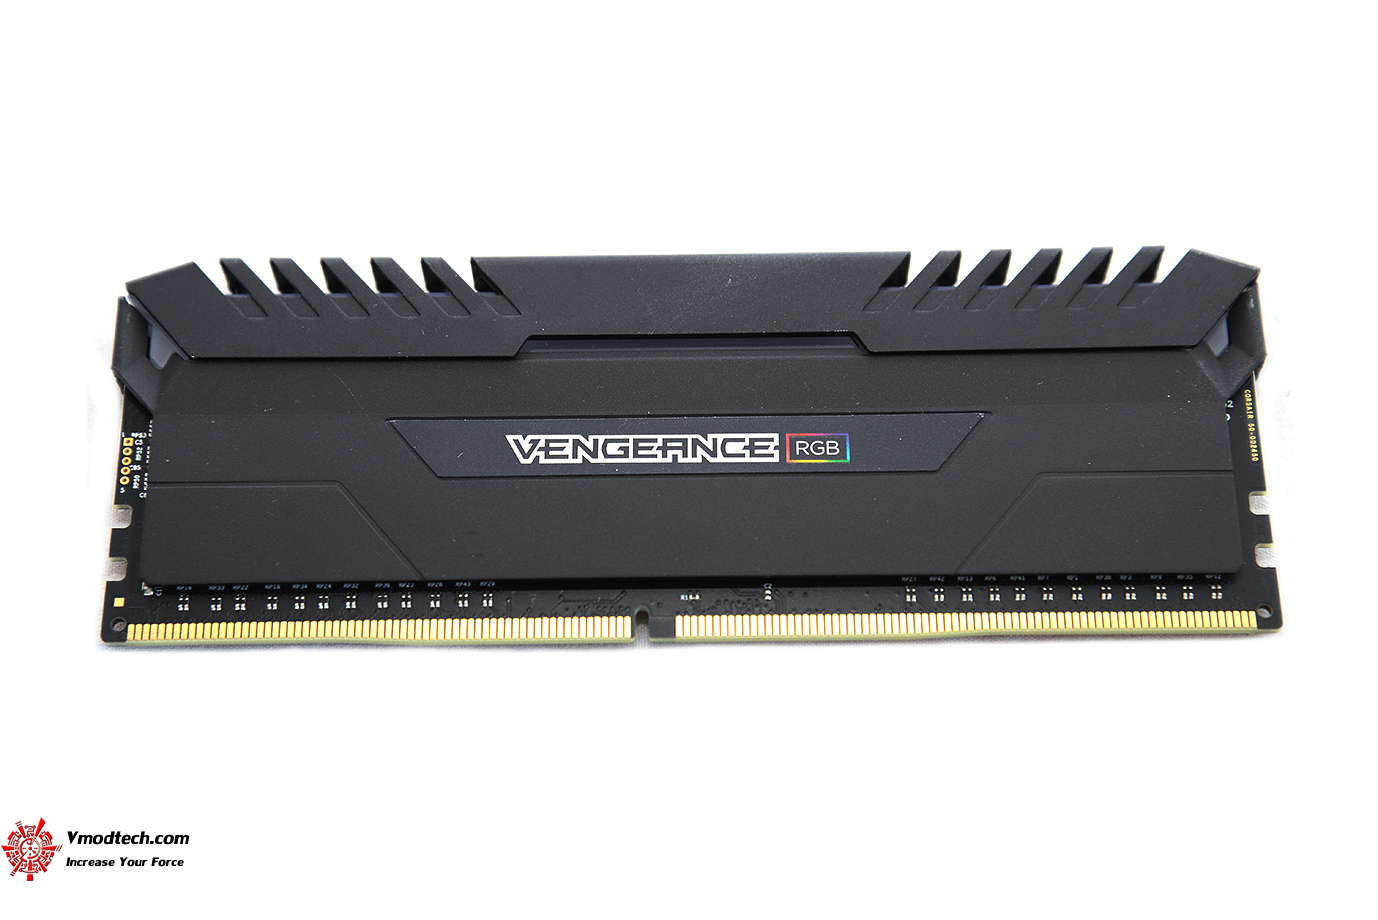 dsc 7303 CORSAIR VENGEANCE RGB 16GB (2 x 8GB) DDR4 DRAM 3000MHz C15 REVIEW